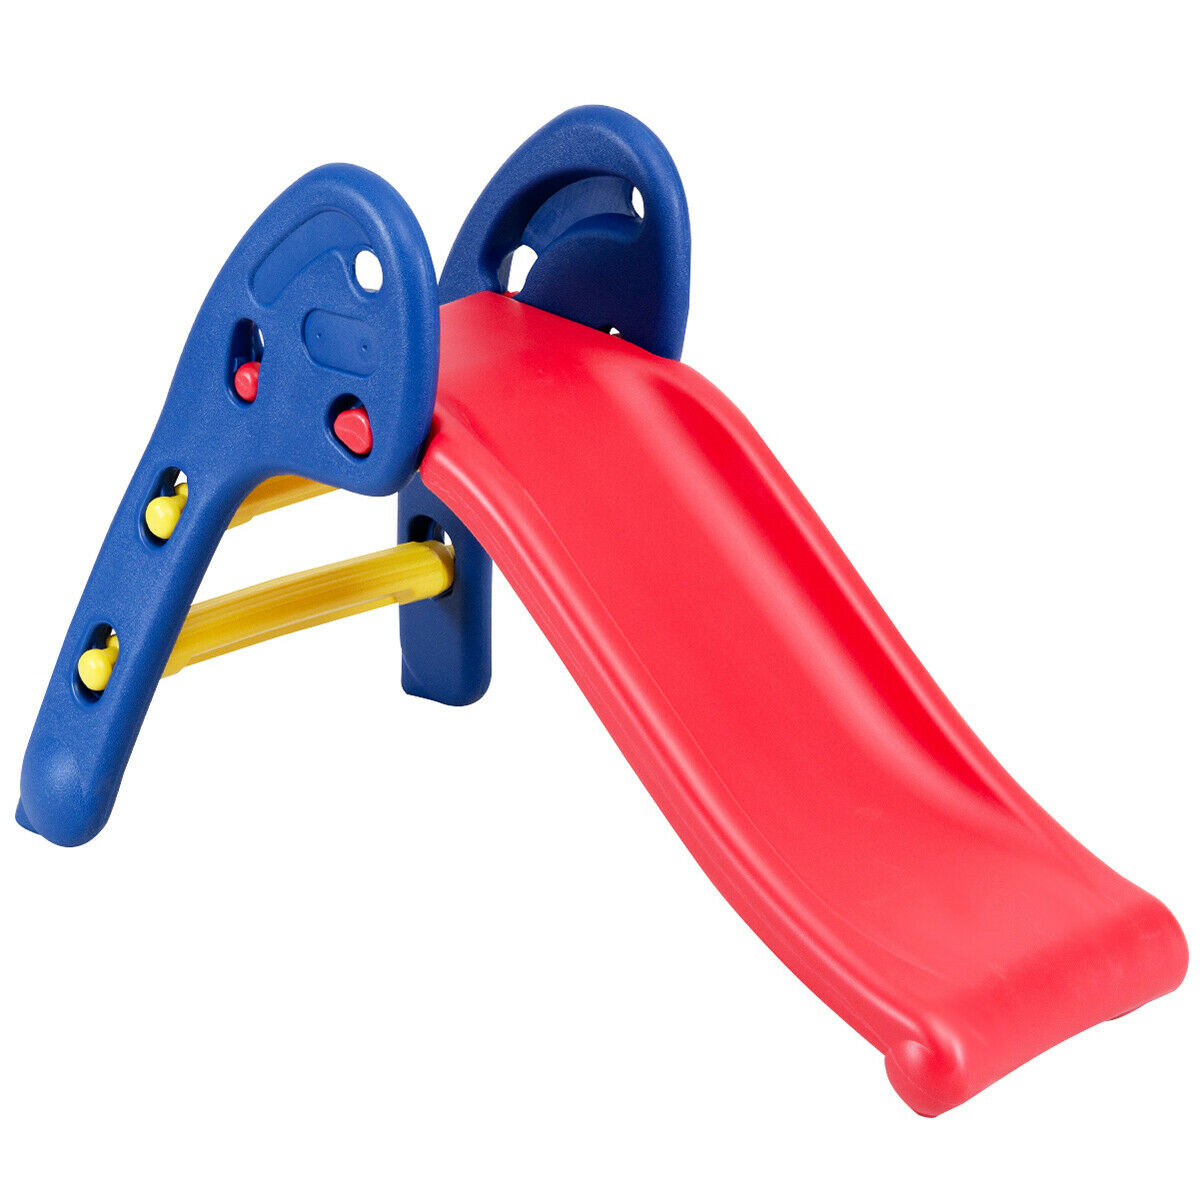 2 Step Children Folding Slide Plastic Fun Toy Up-down For Kids Indoor & Outdoor